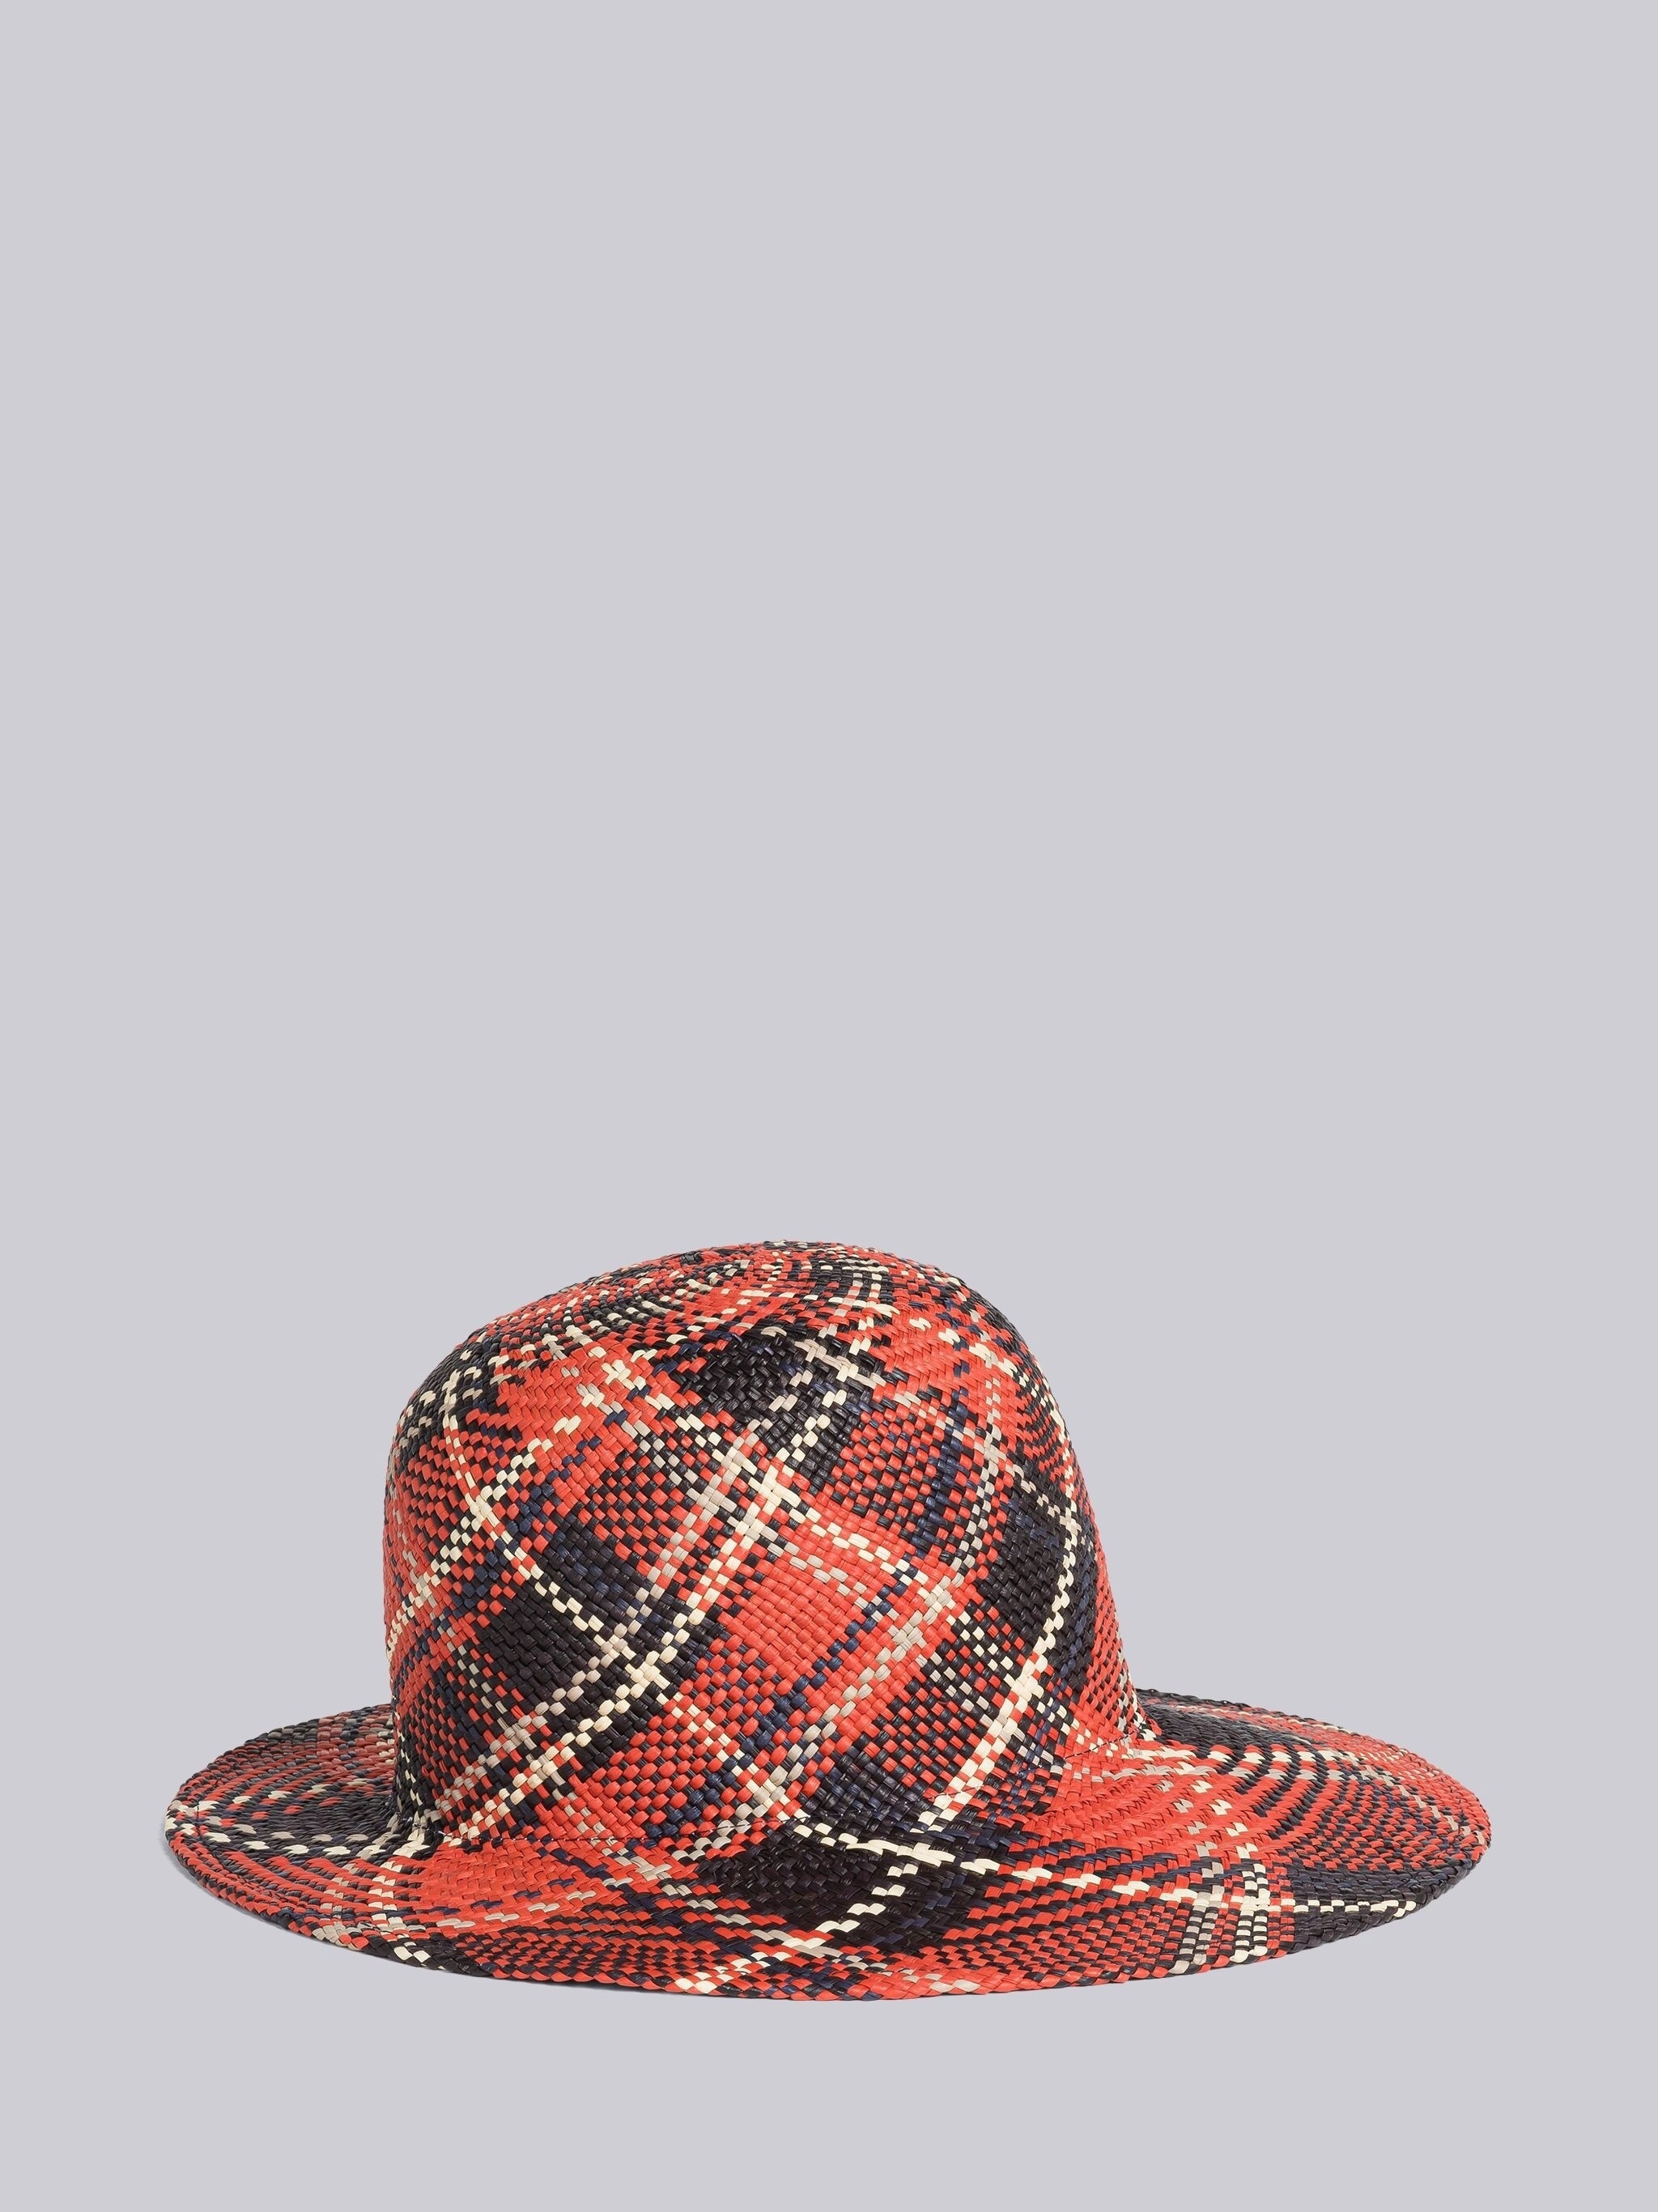 Straw Madras Sun Hat - 3